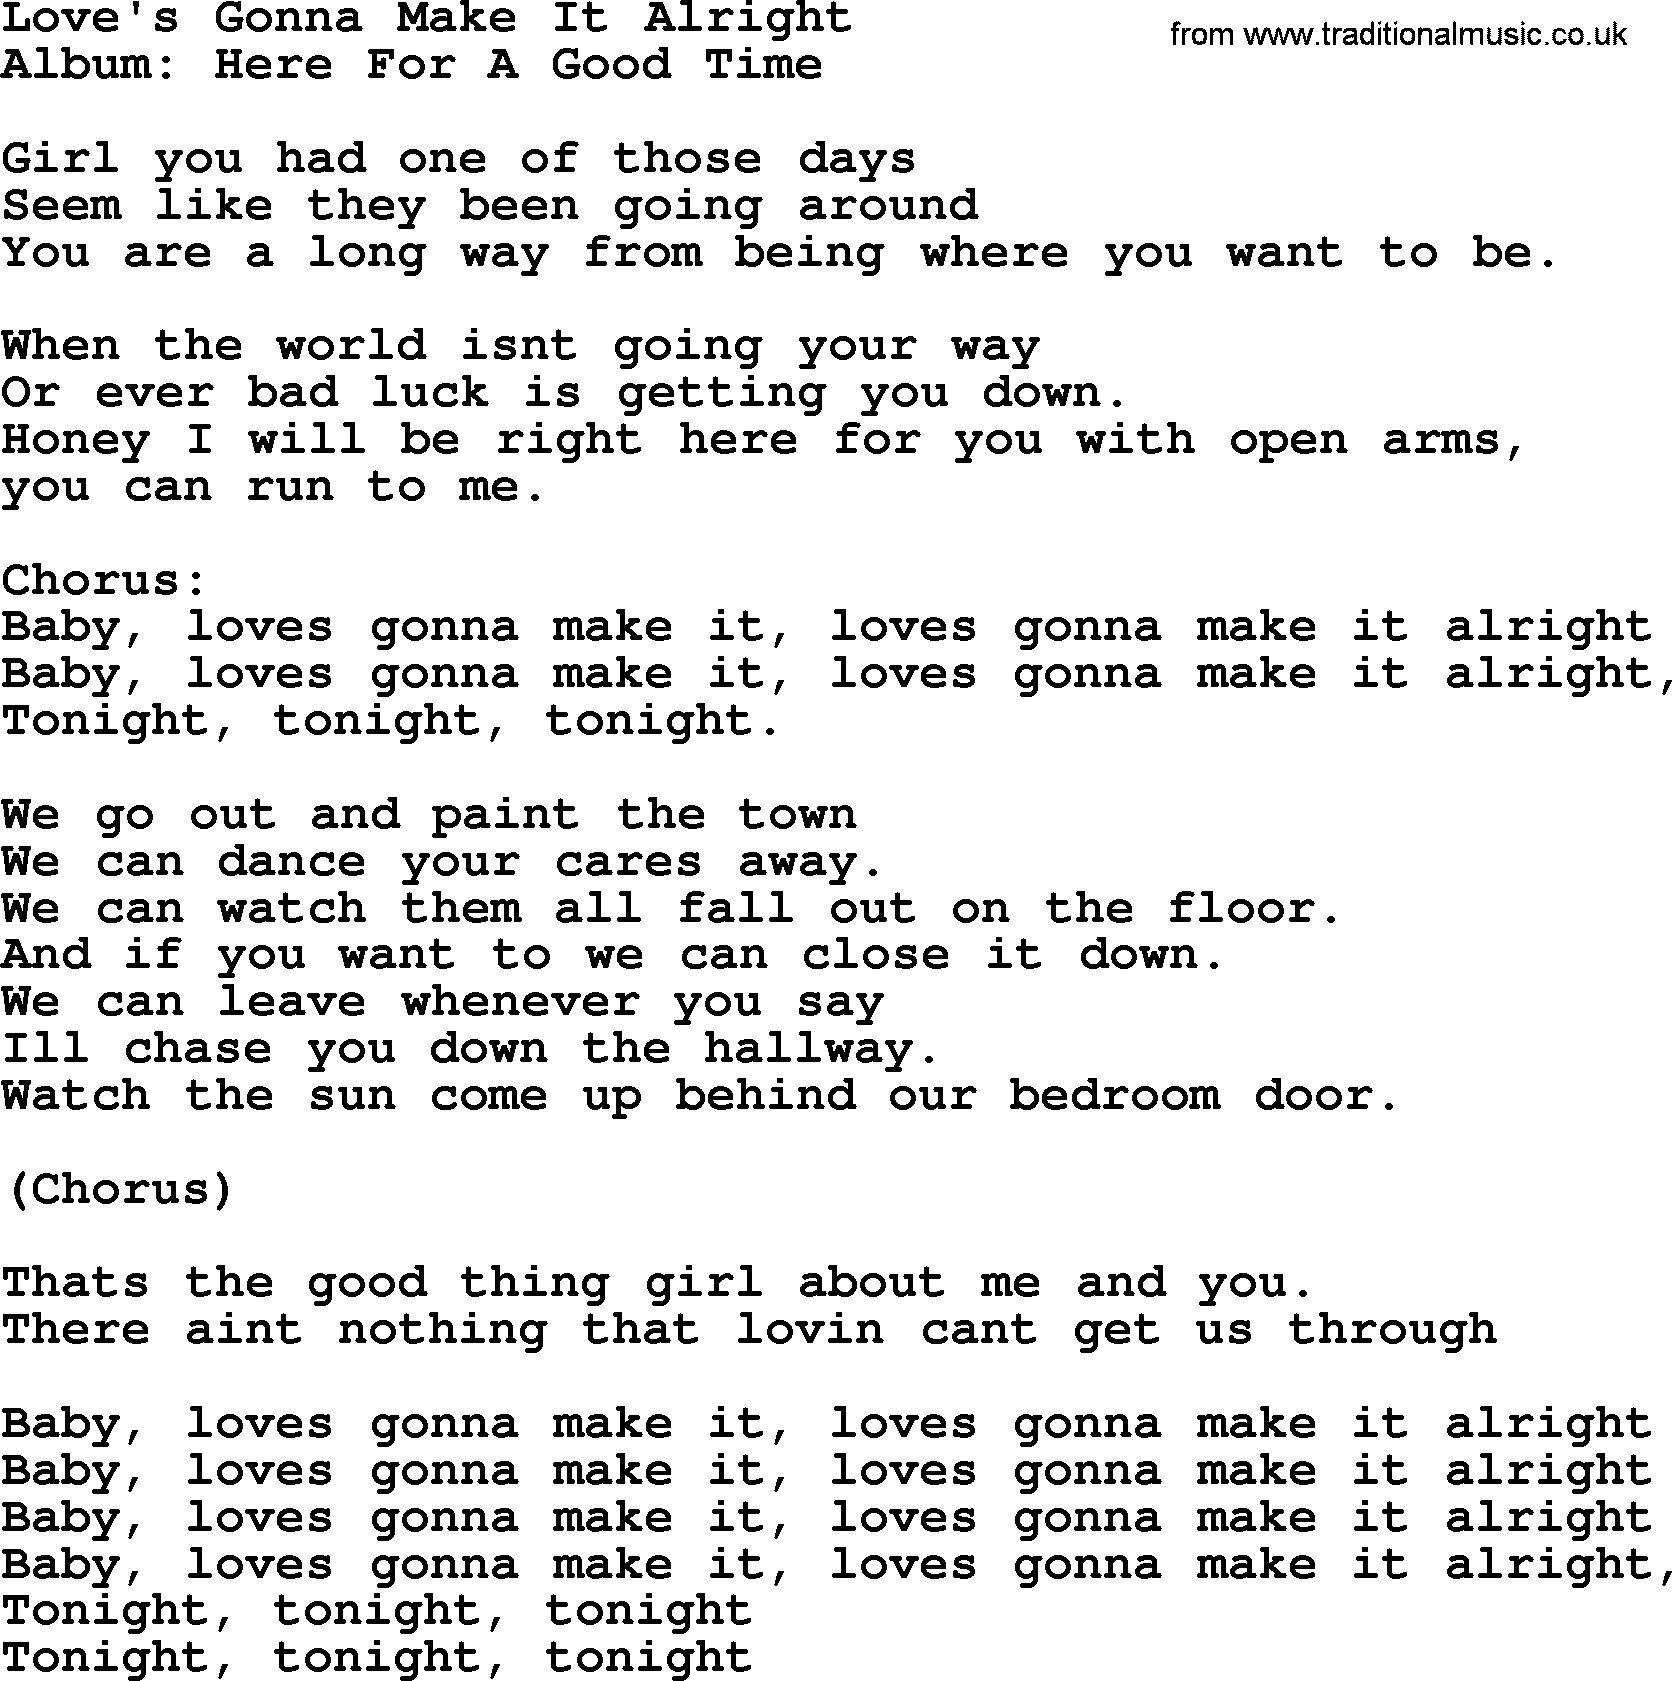 George Strait song: Love's Gonna Make It Alright, lyrics